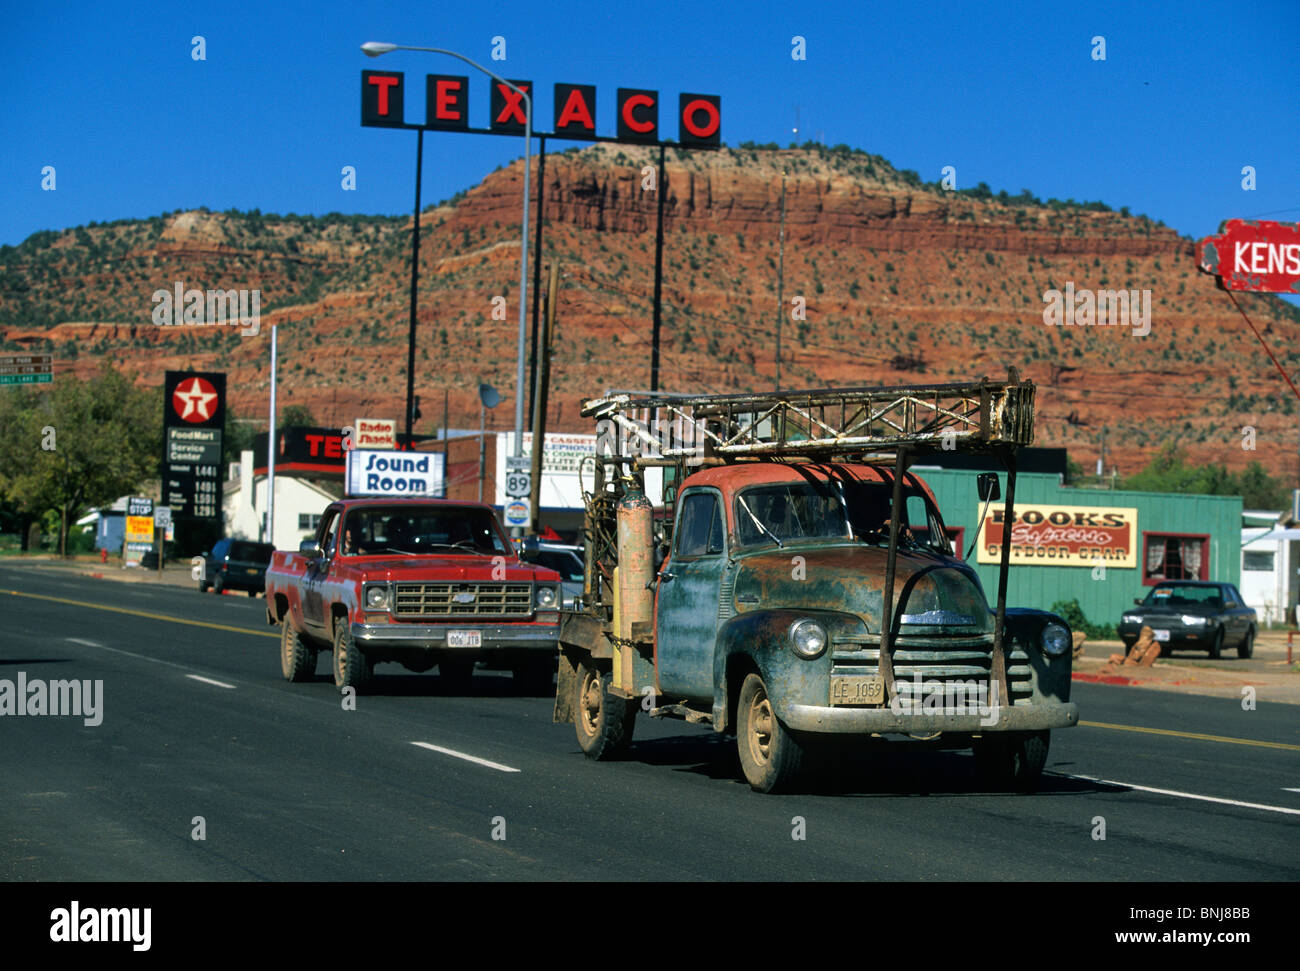 USA-Utah Stadt Stadt Autos Automobile Klassiker Auto Tankstelle Landschaftskulisse Kanab Nordamerika Vereinigte Staaten von Amerika Stockfoto